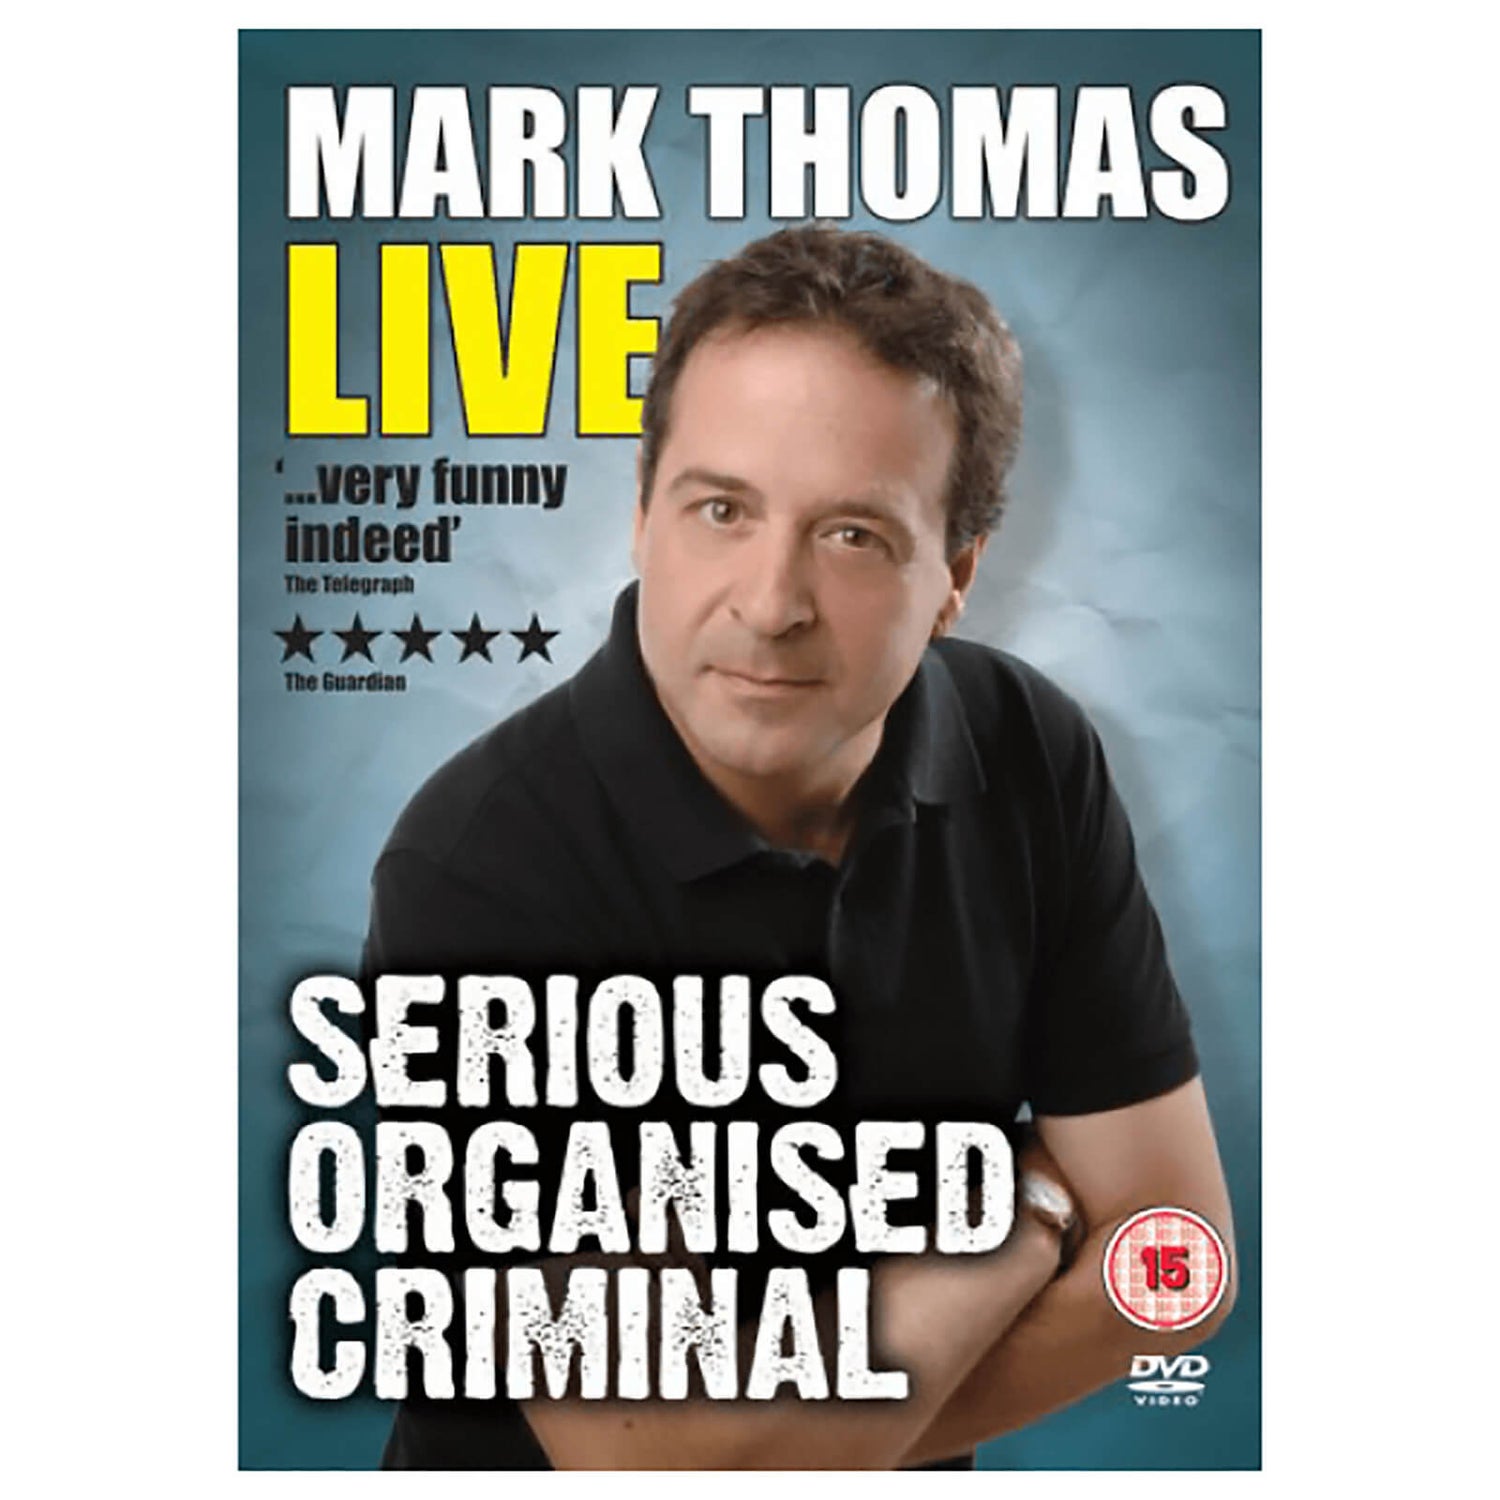 Mark Thomas - Serious Organised Criminal